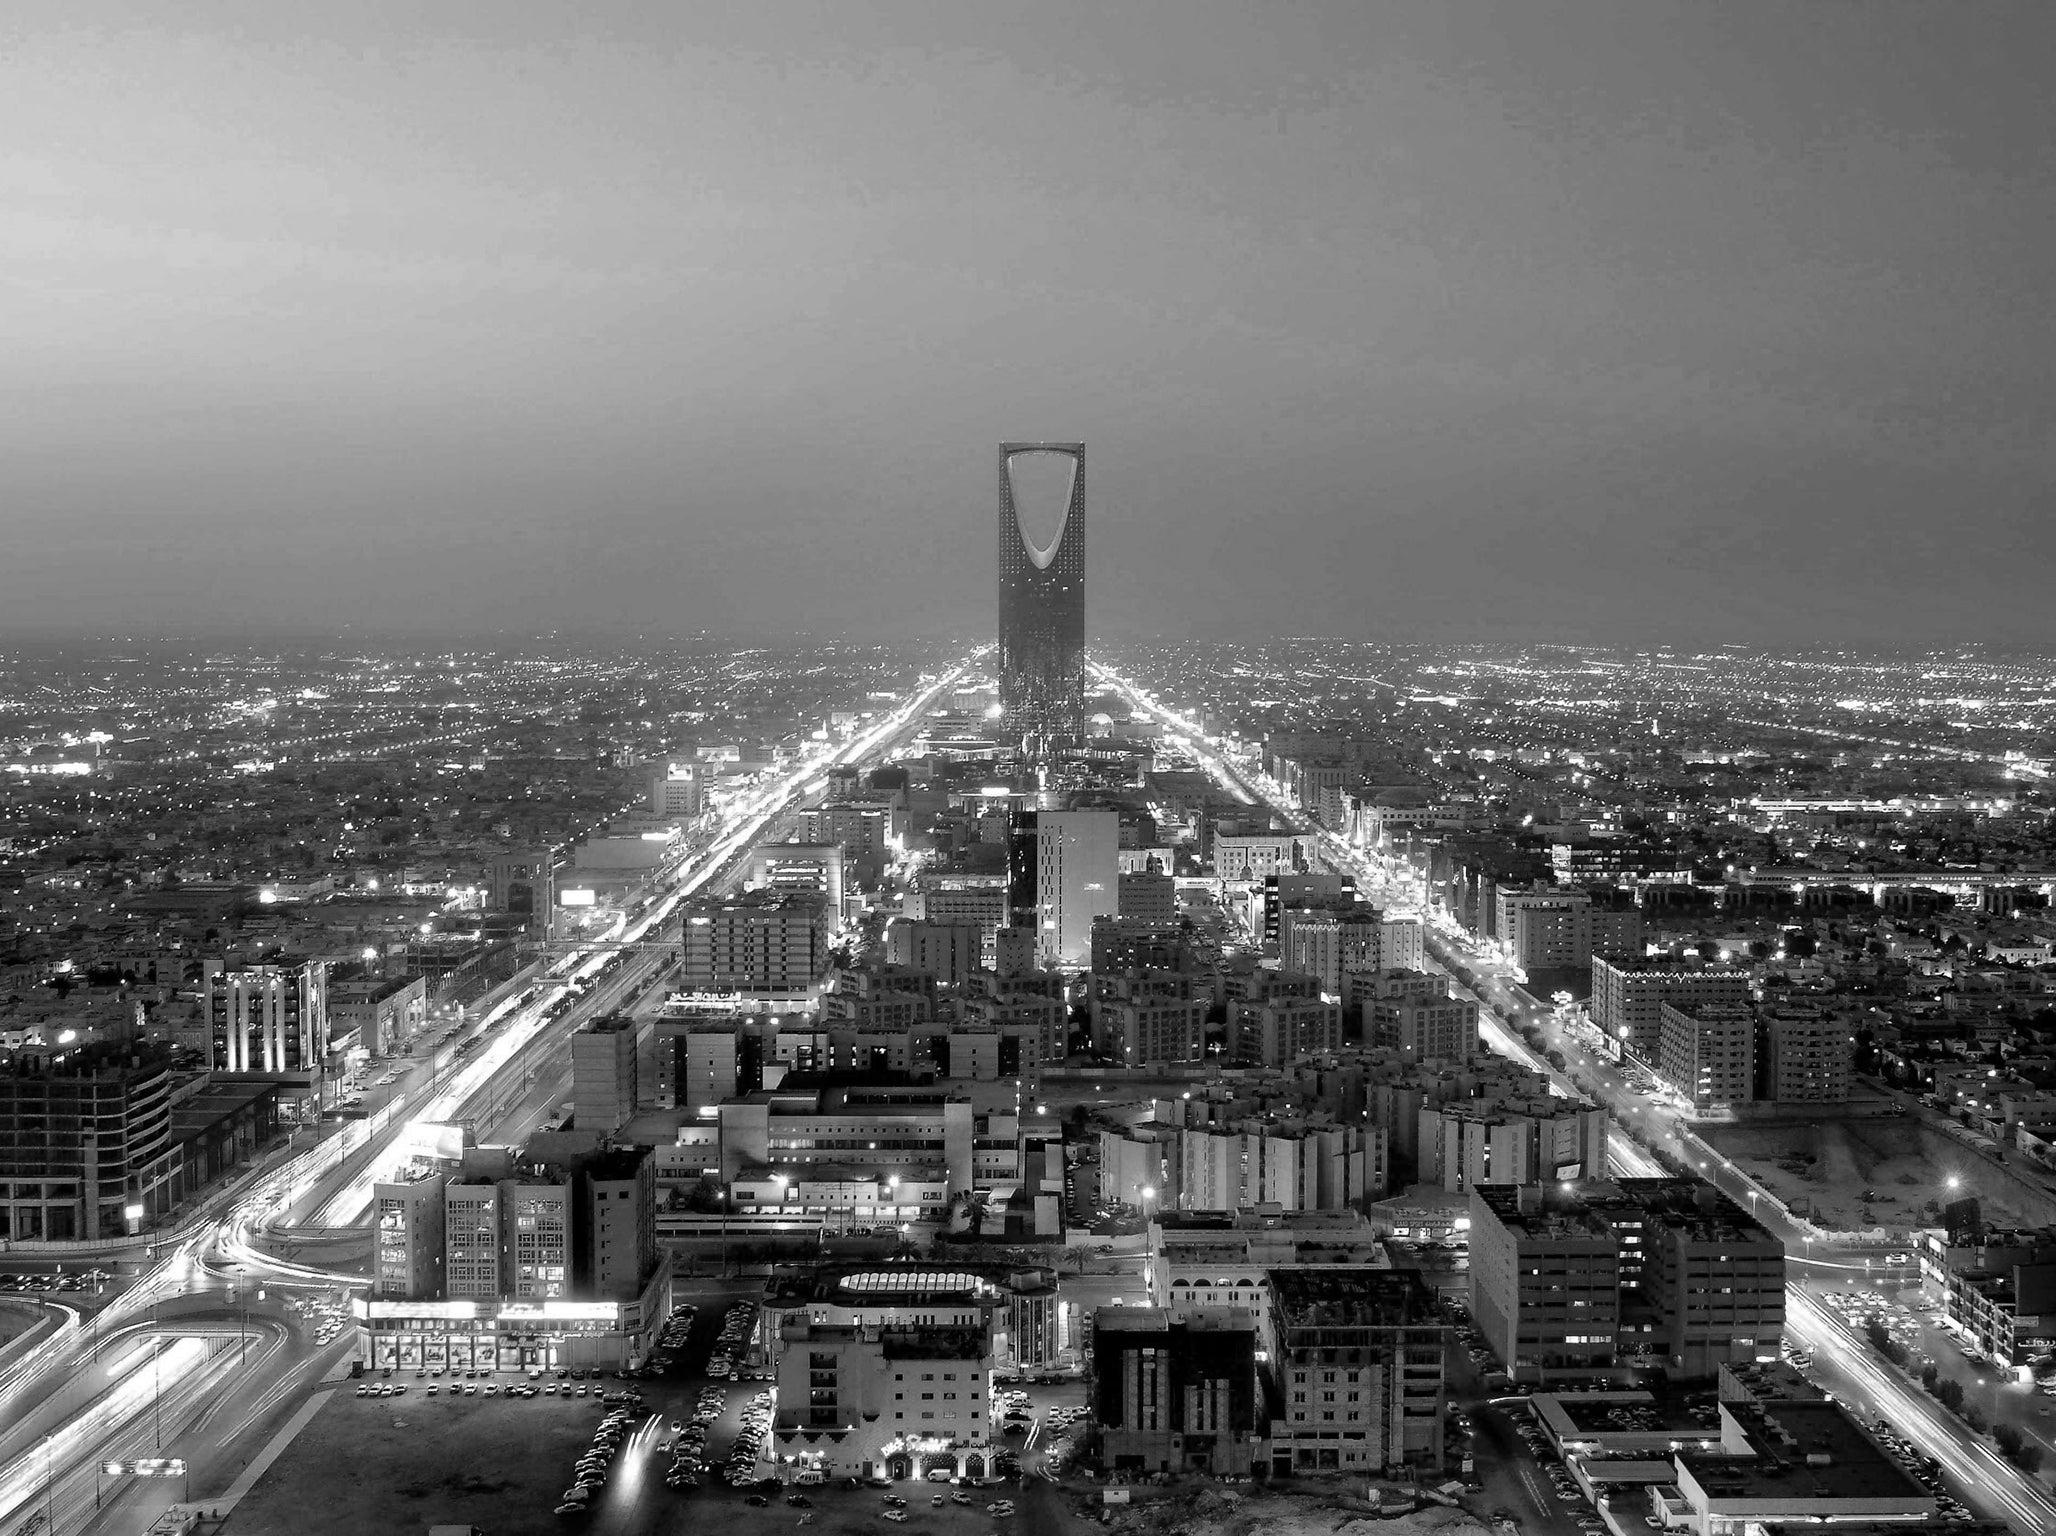 Riyadh is set to host numerous international events